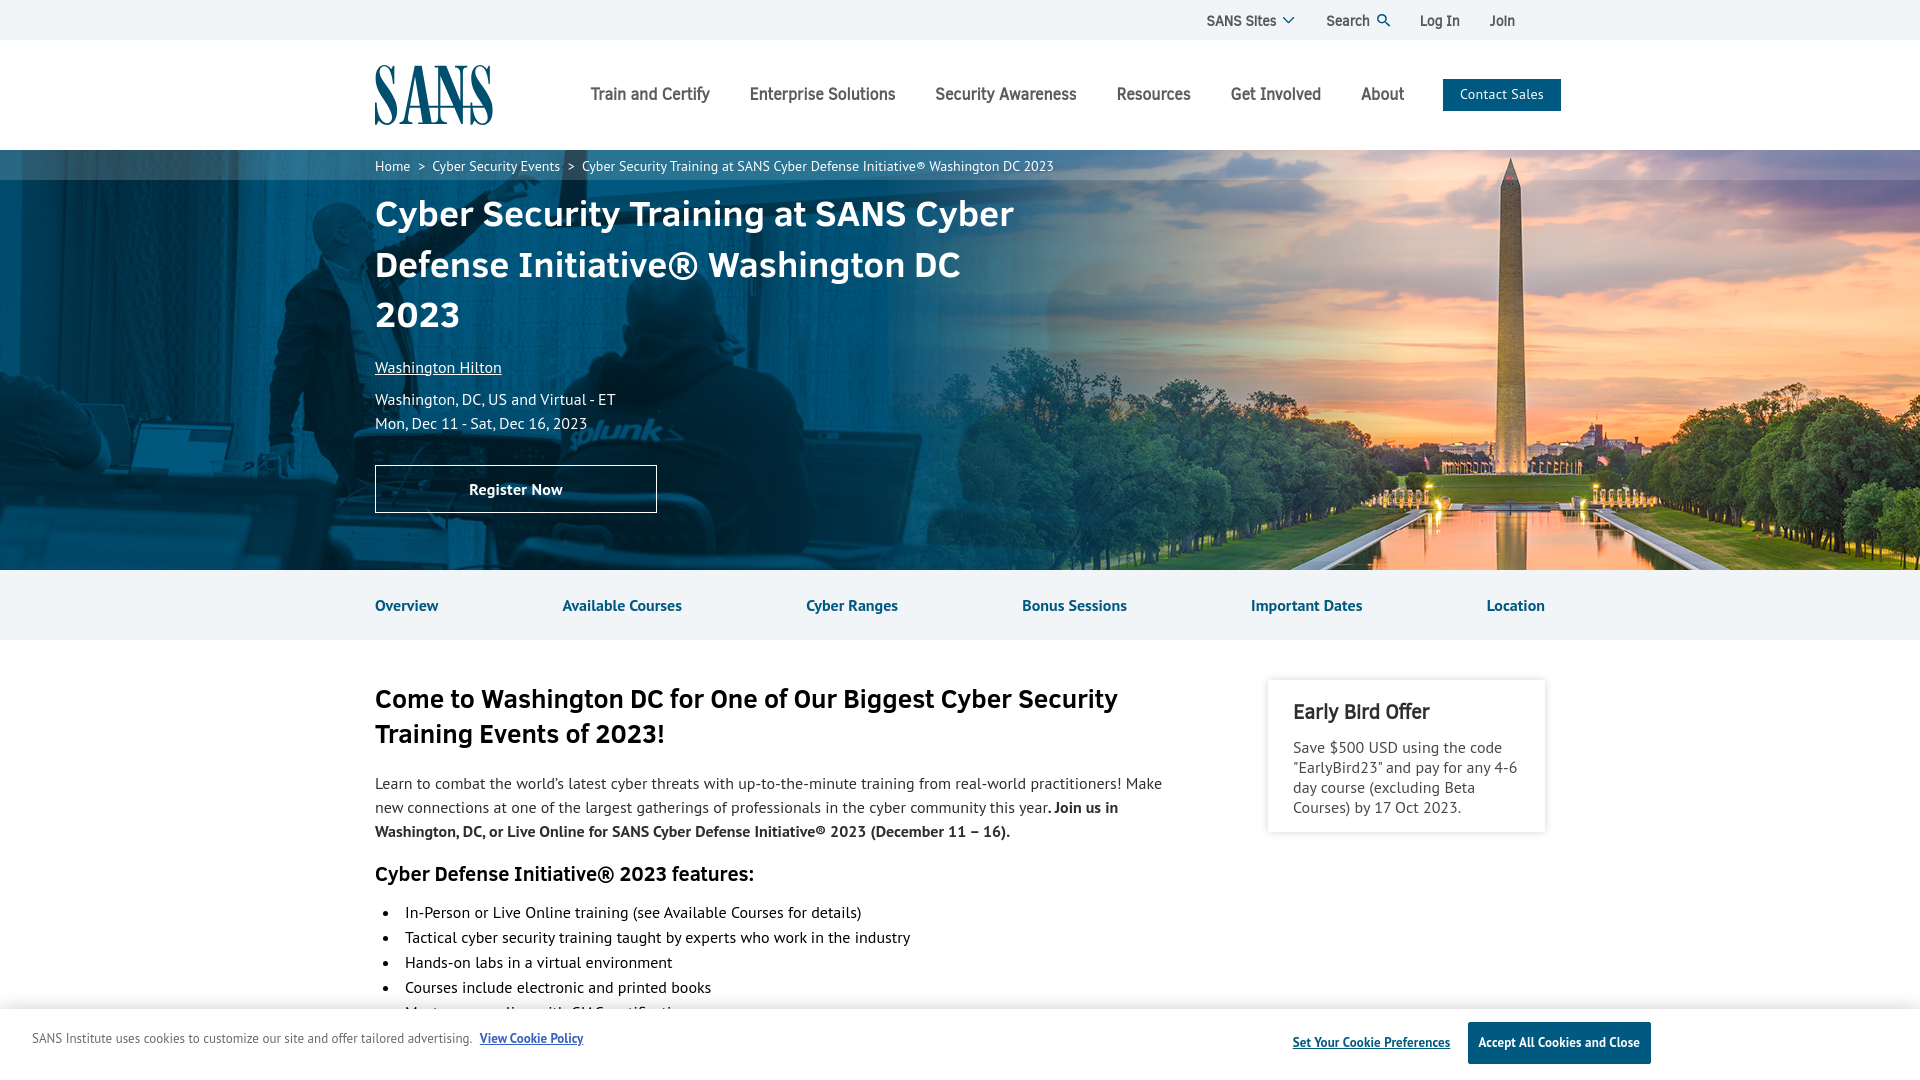 SANS Cyber Defense Initiative 2023 (December 11-16)